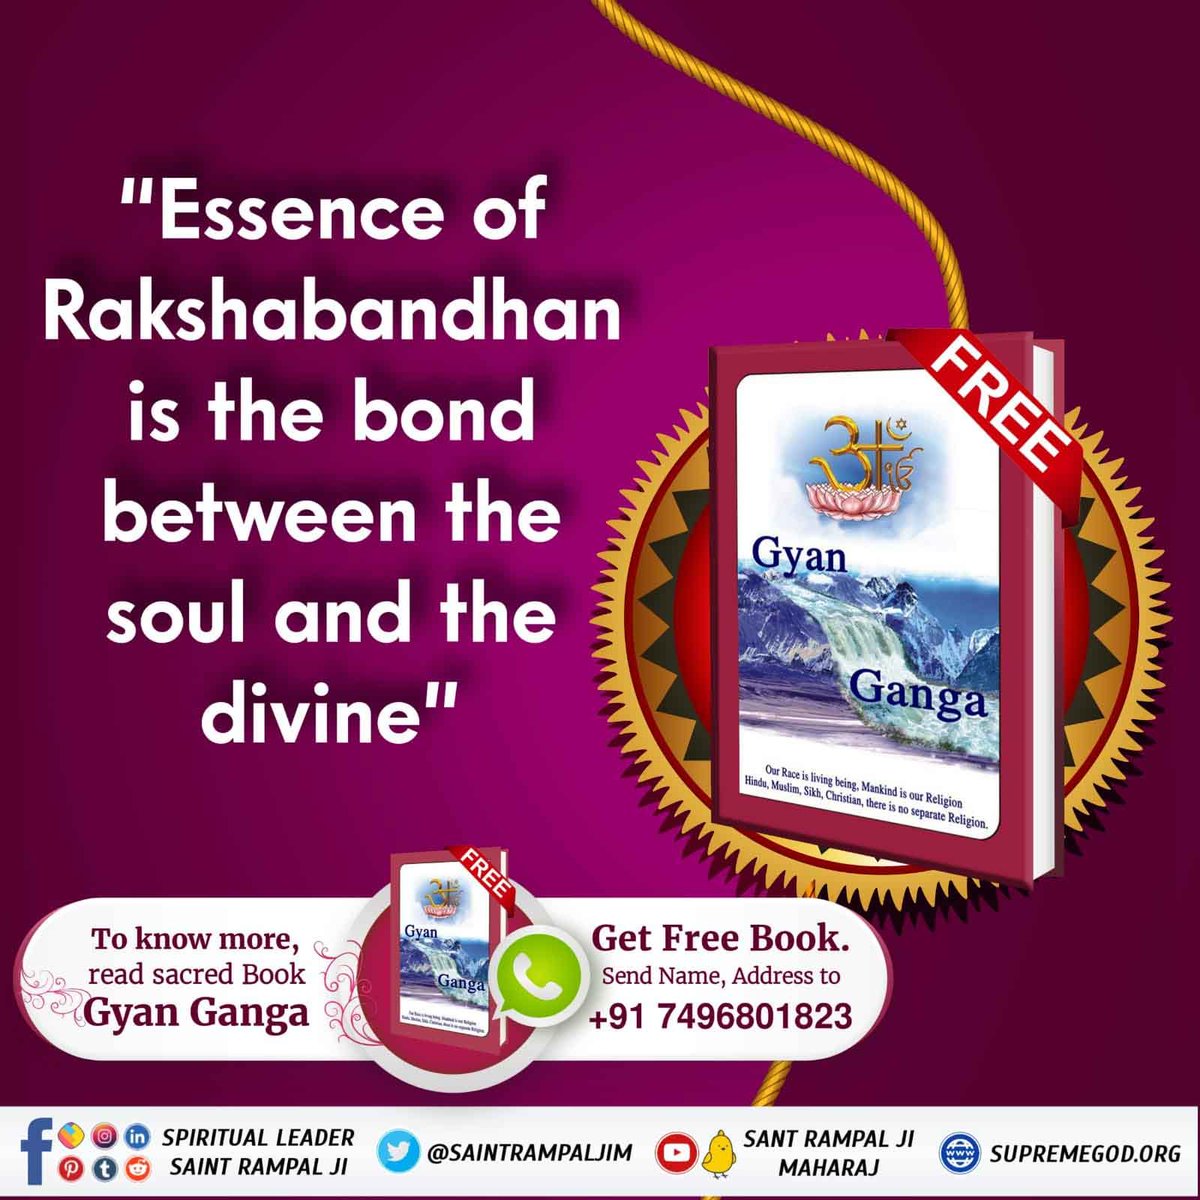 #GodNightMonday
#जगत_उद्धारक_संत_रामपालजी
'Essence of Rakshabandhan is the bond between the soul and the divine'

SUBSCRIBE
YouTube channel 'Factful Debates'